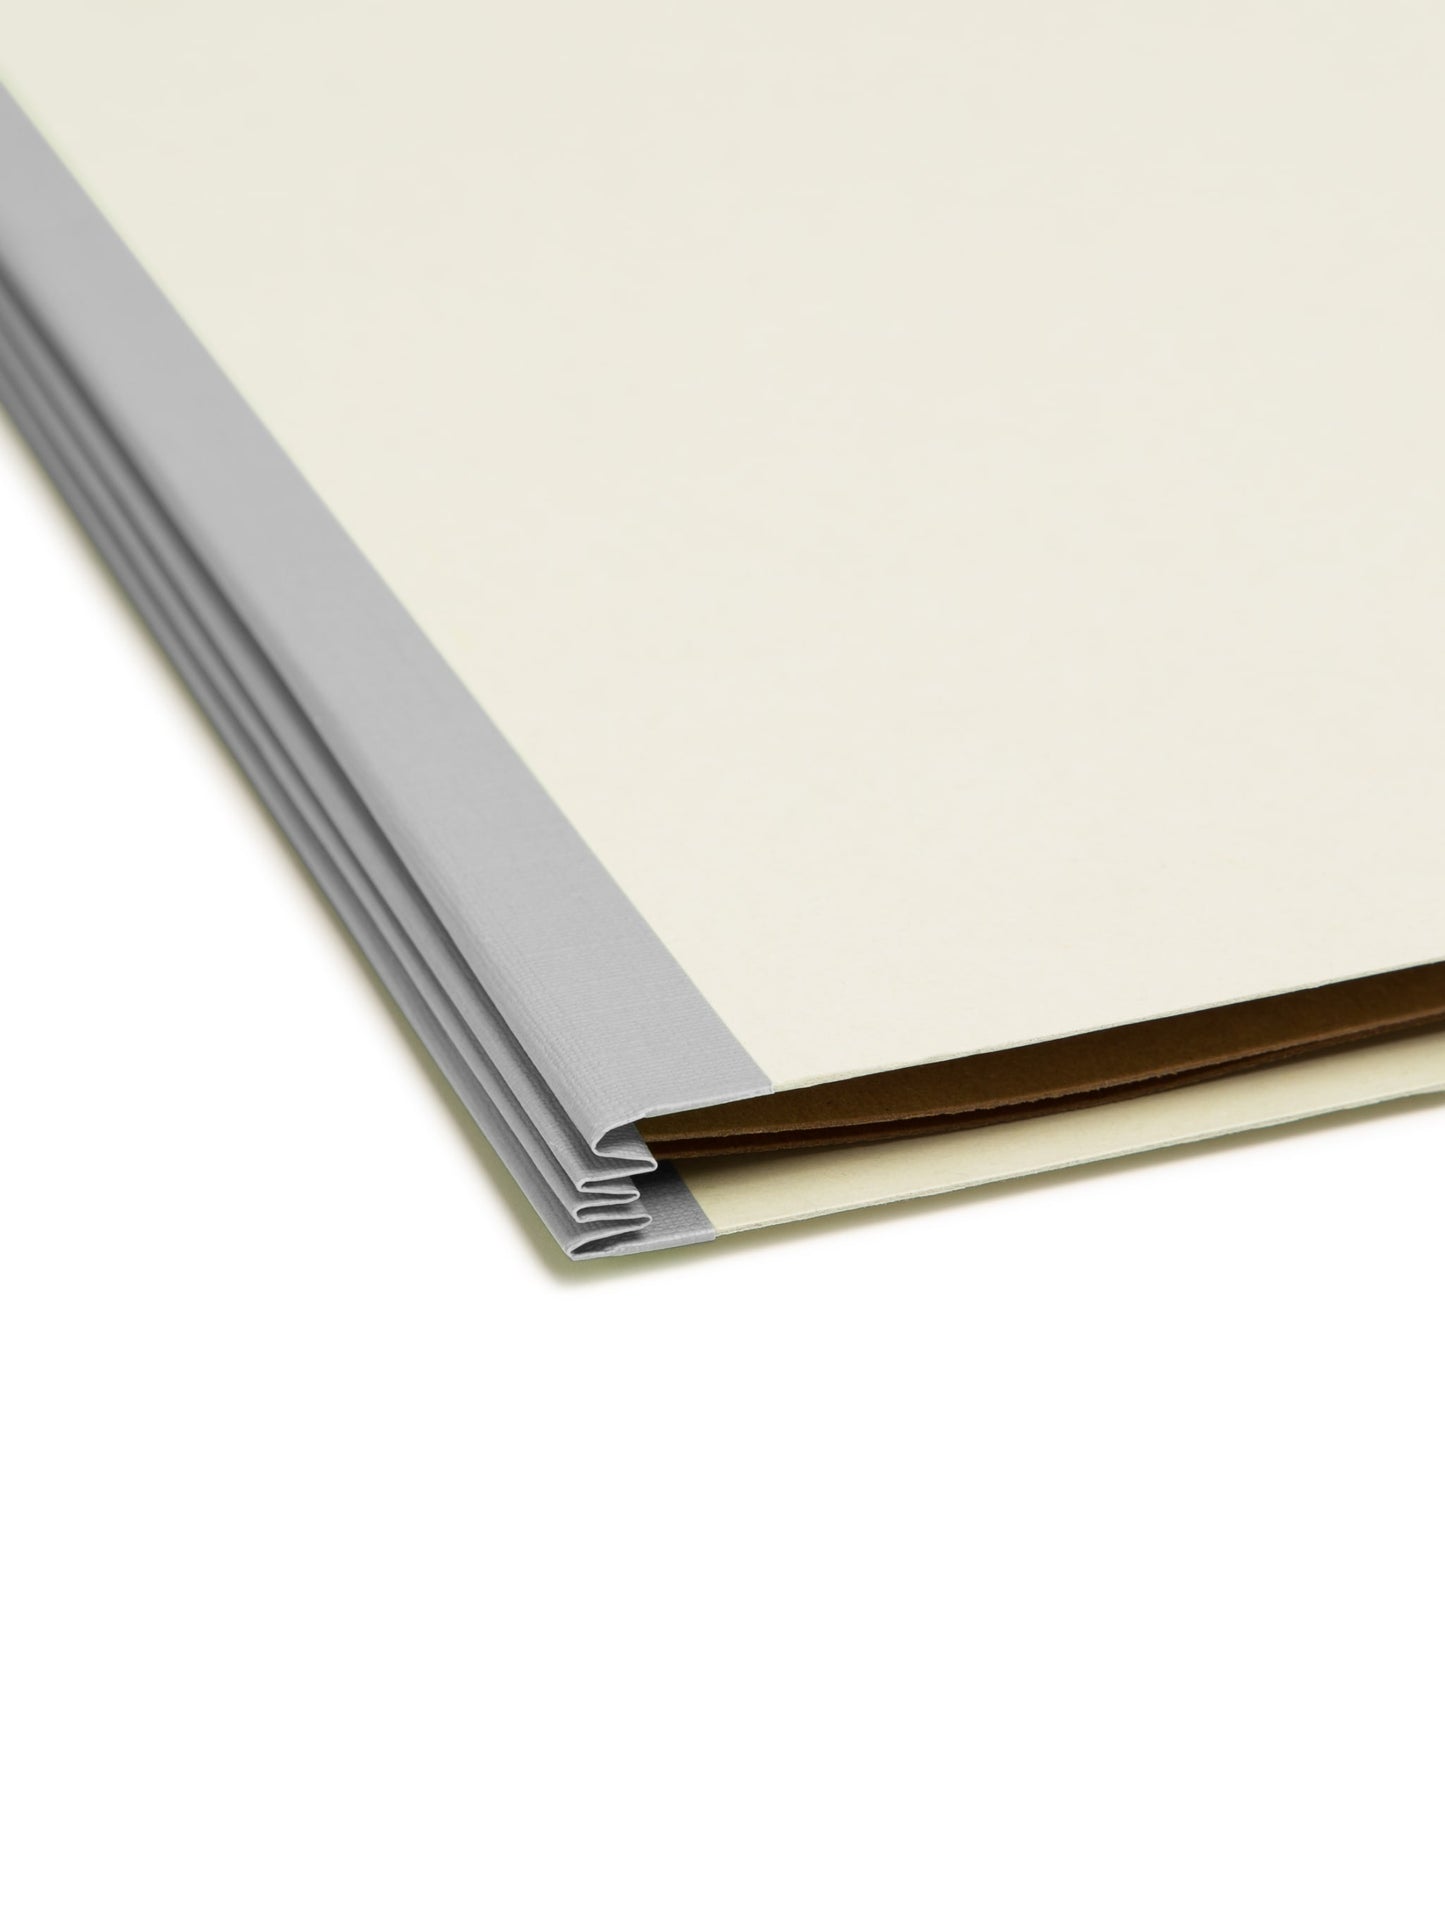 Pressboard Classification File Folders, 1 Divider, 2 inch Expansion, Gray/Green Color, Letter Size, Set of 0, 30086486137233